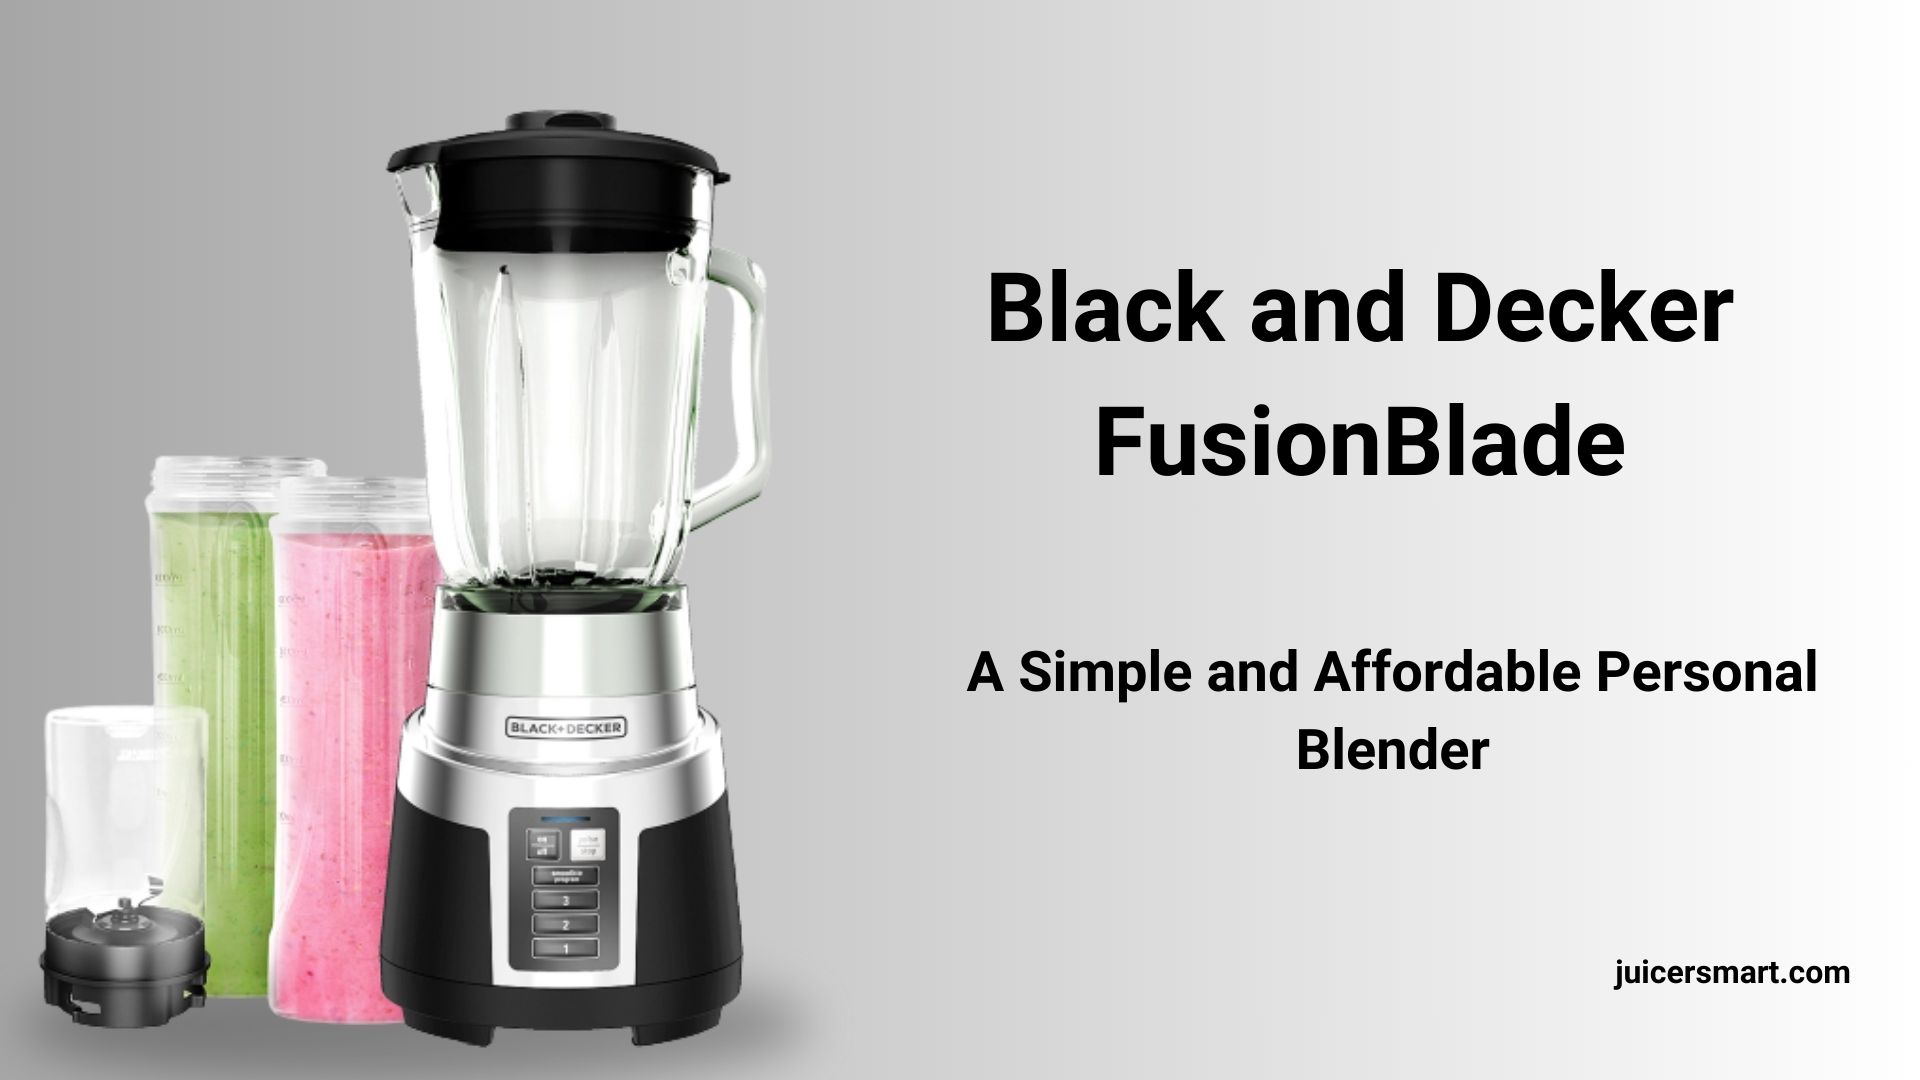 Black and Decker FusionBlade